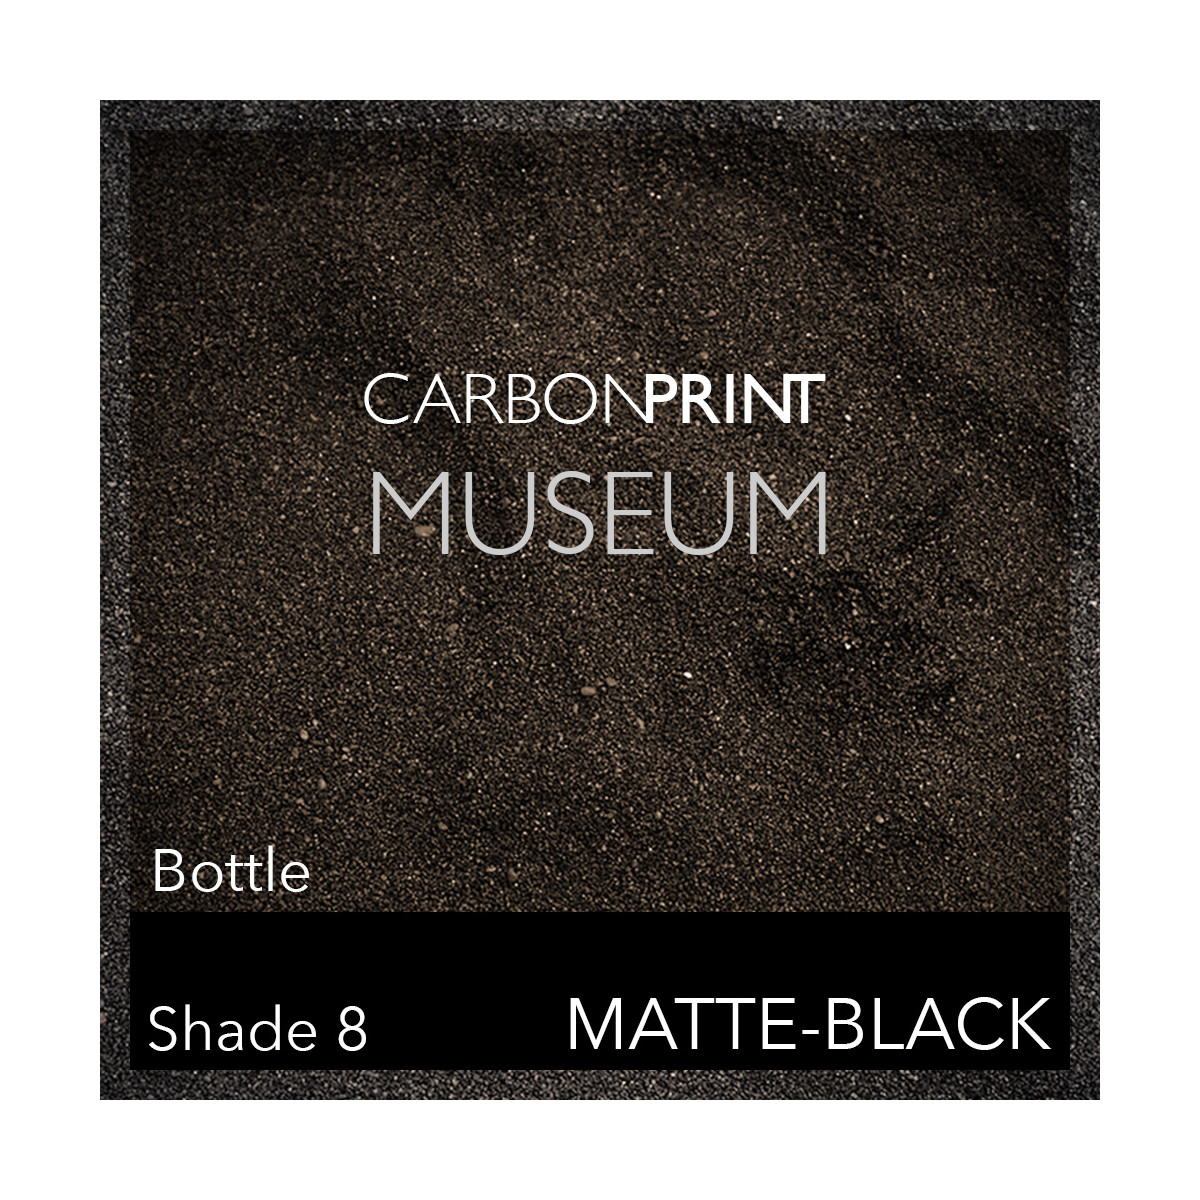 Carbonprint Museum Shade8 Kanal MK